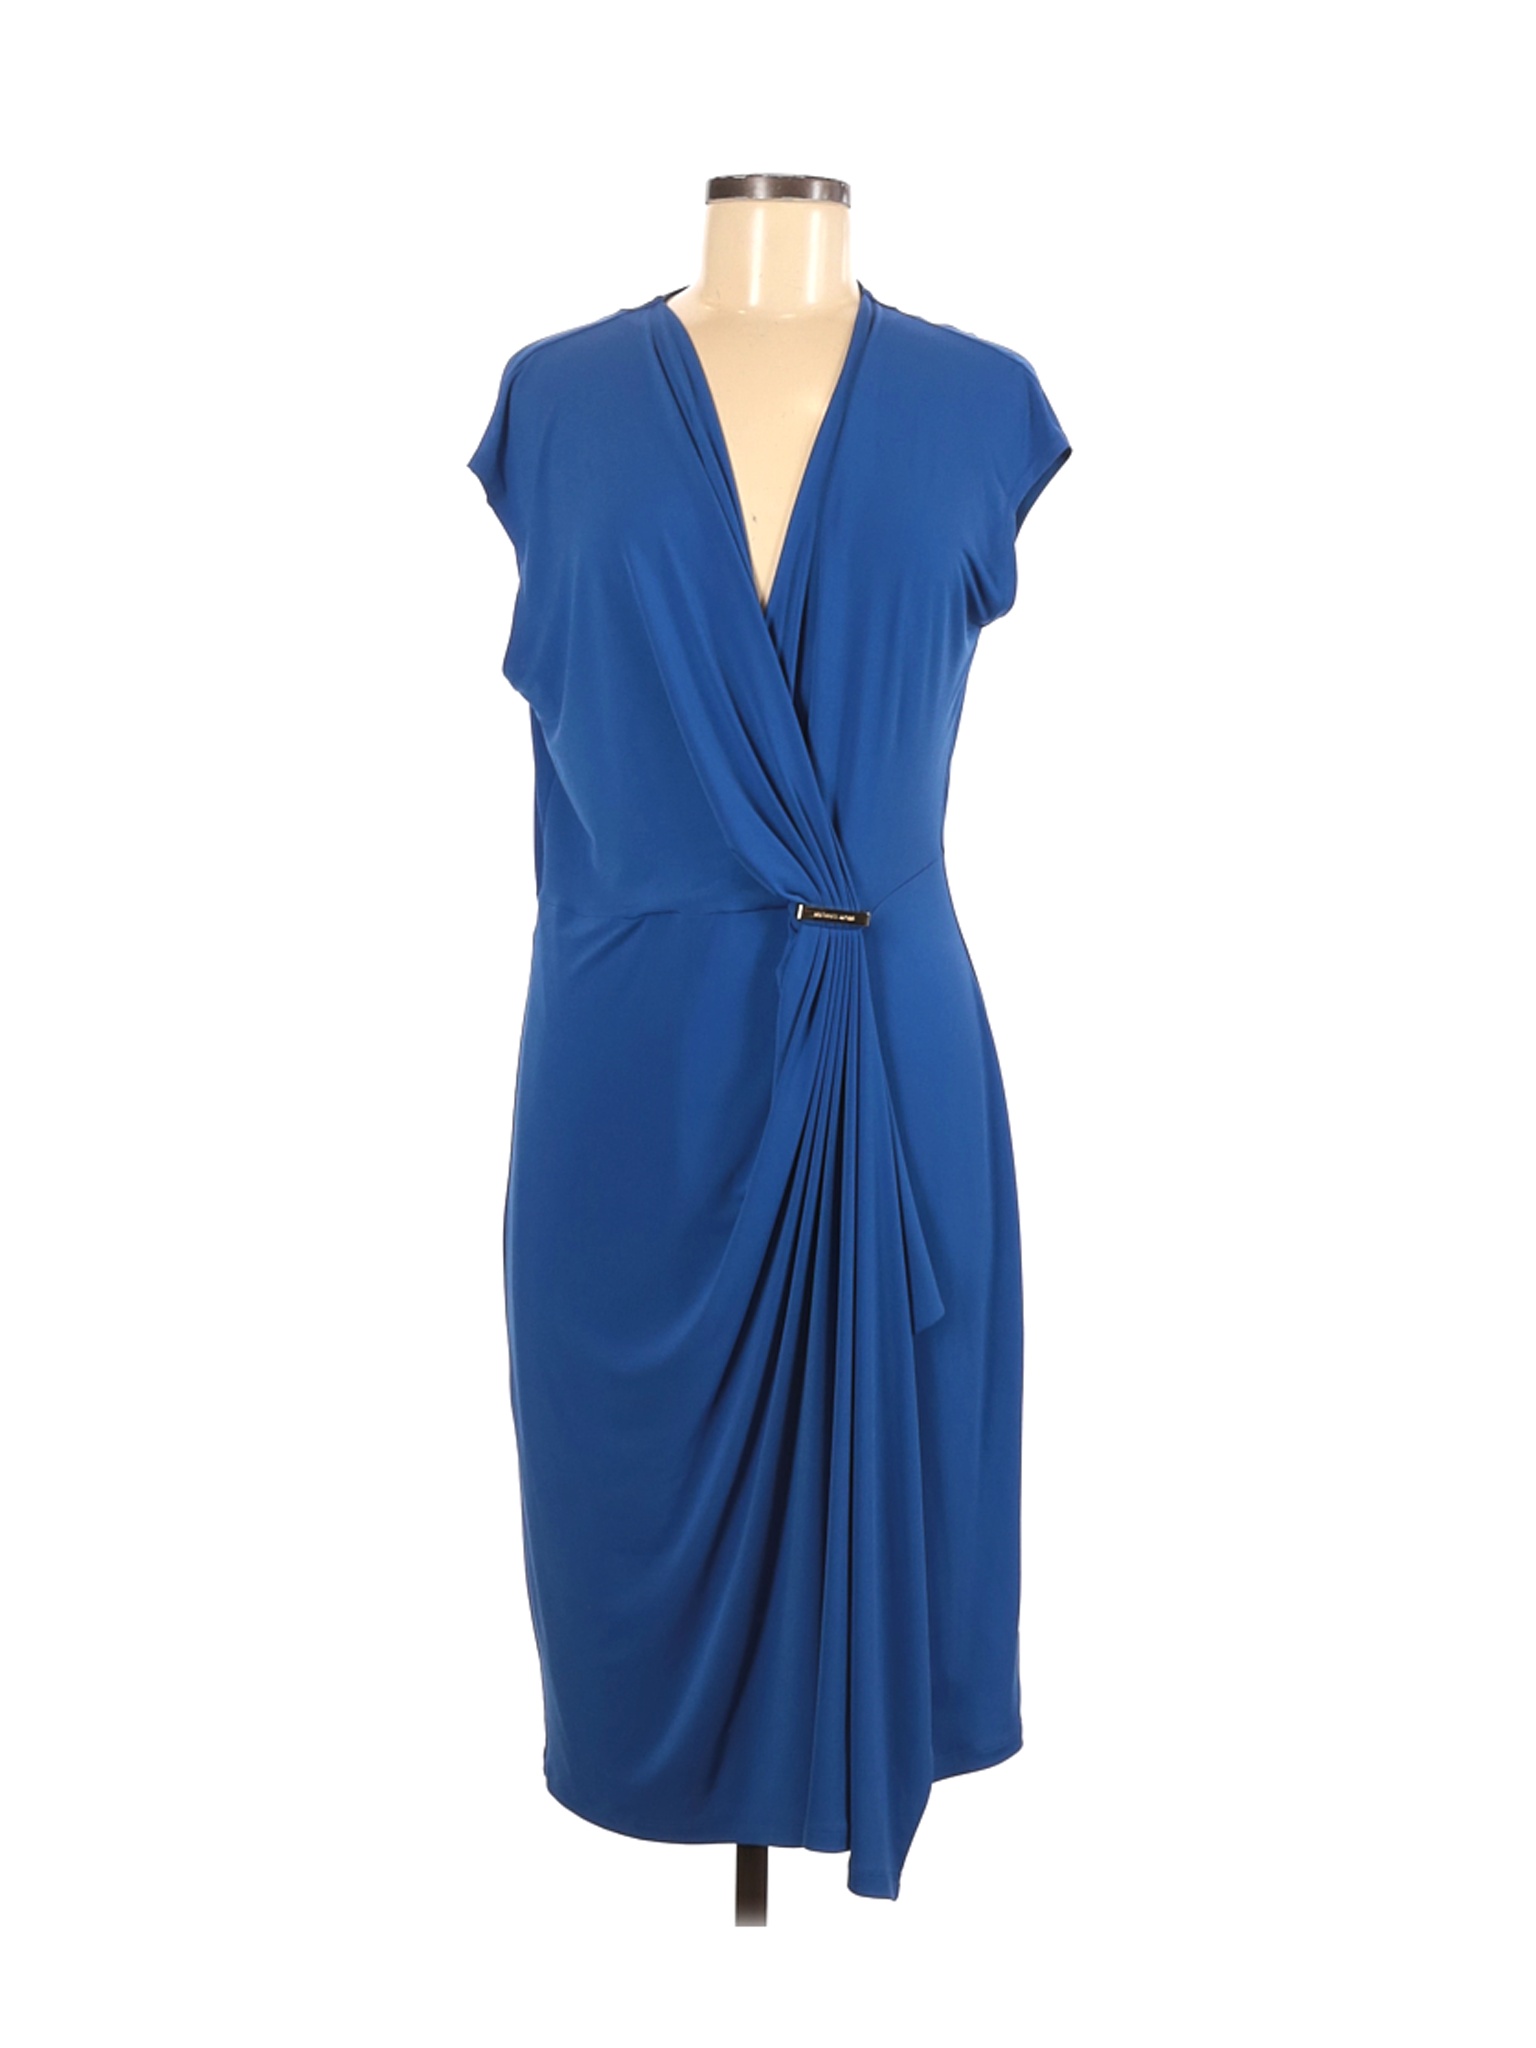 MICHAEL Michael Kors Women Blue Cocktail Dress L | eBay